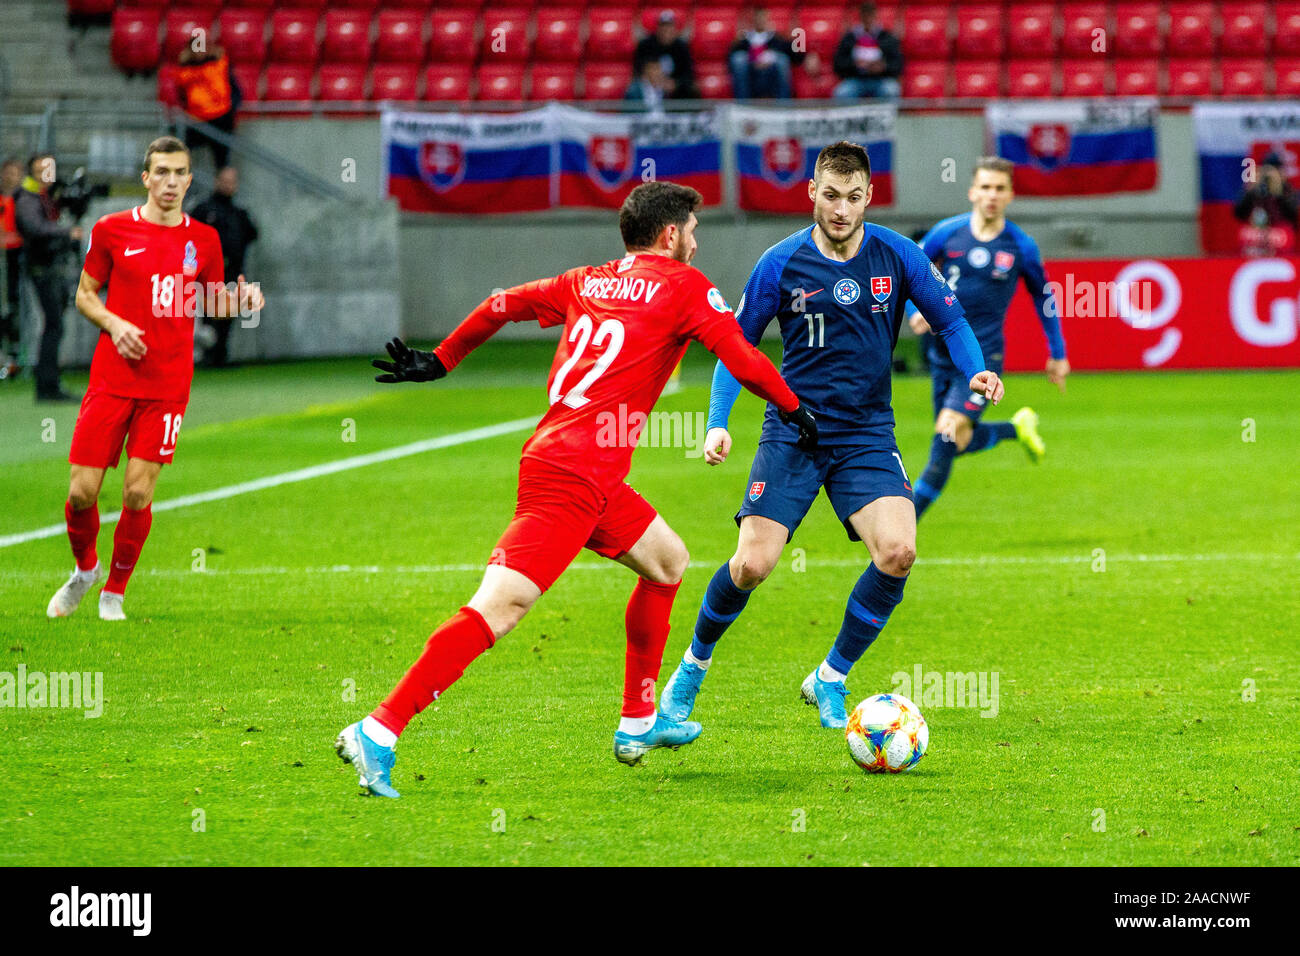 Trnava, Slovakia. 19th November, 2019. Matus Bero (11) in action during the Euro 2020 qualifier between Slovakia and Azerbaijan. Stock Photo